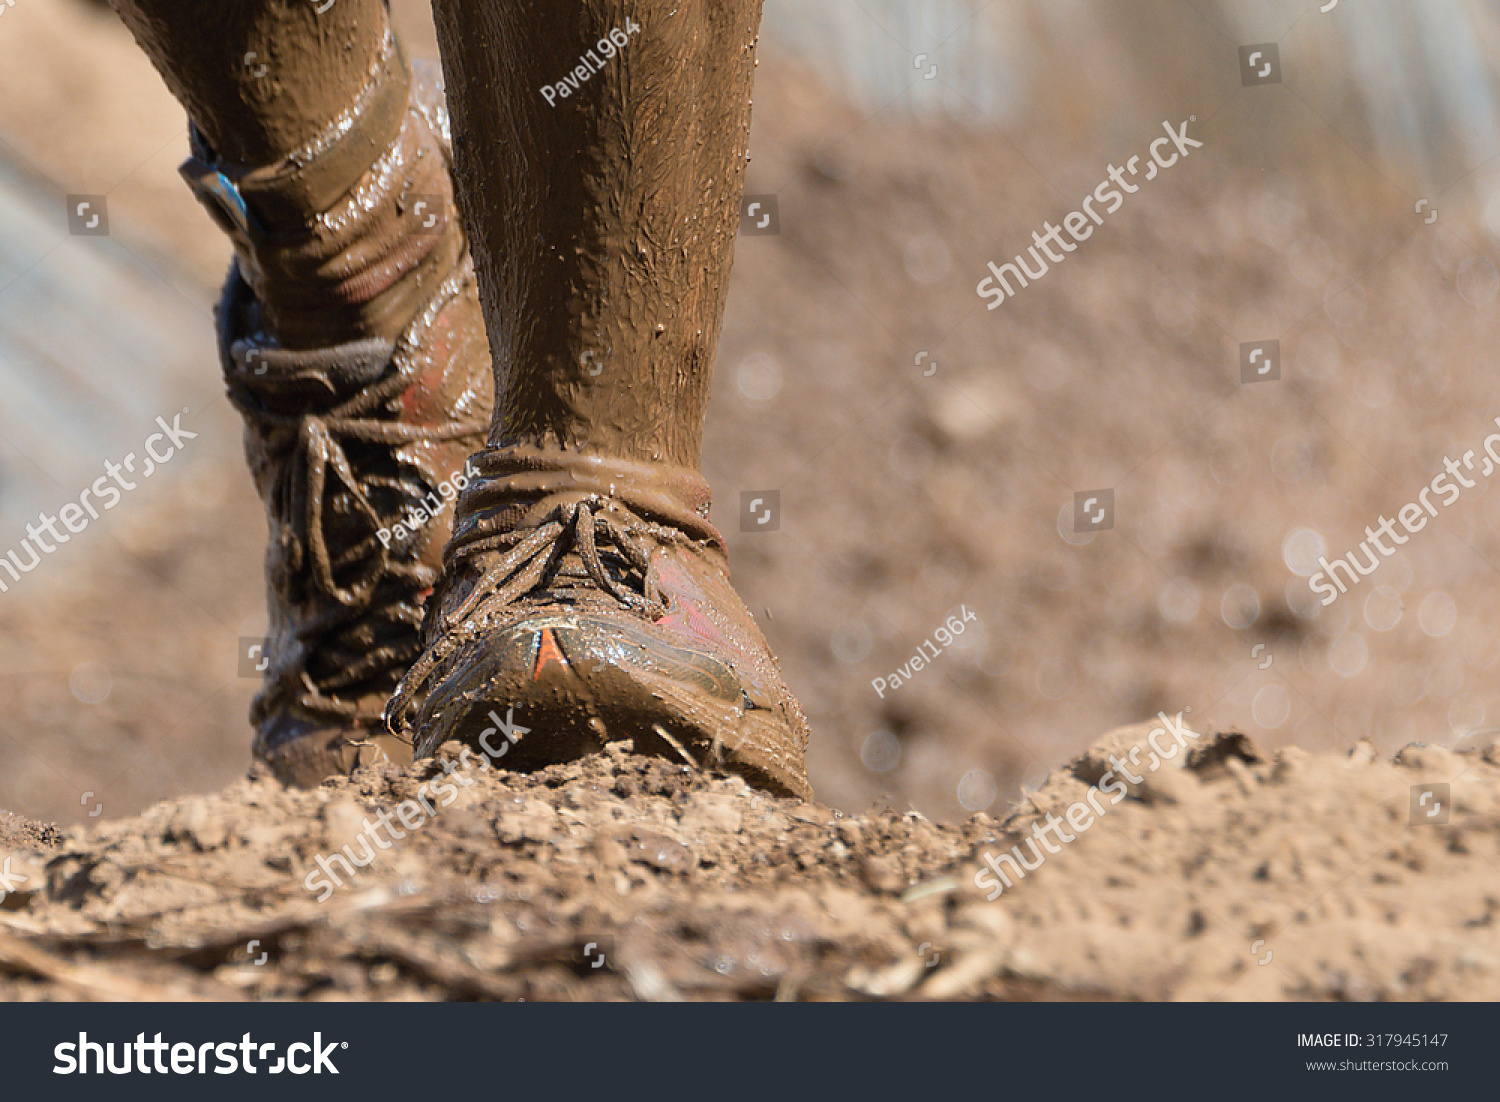 Mud race runners #317945147